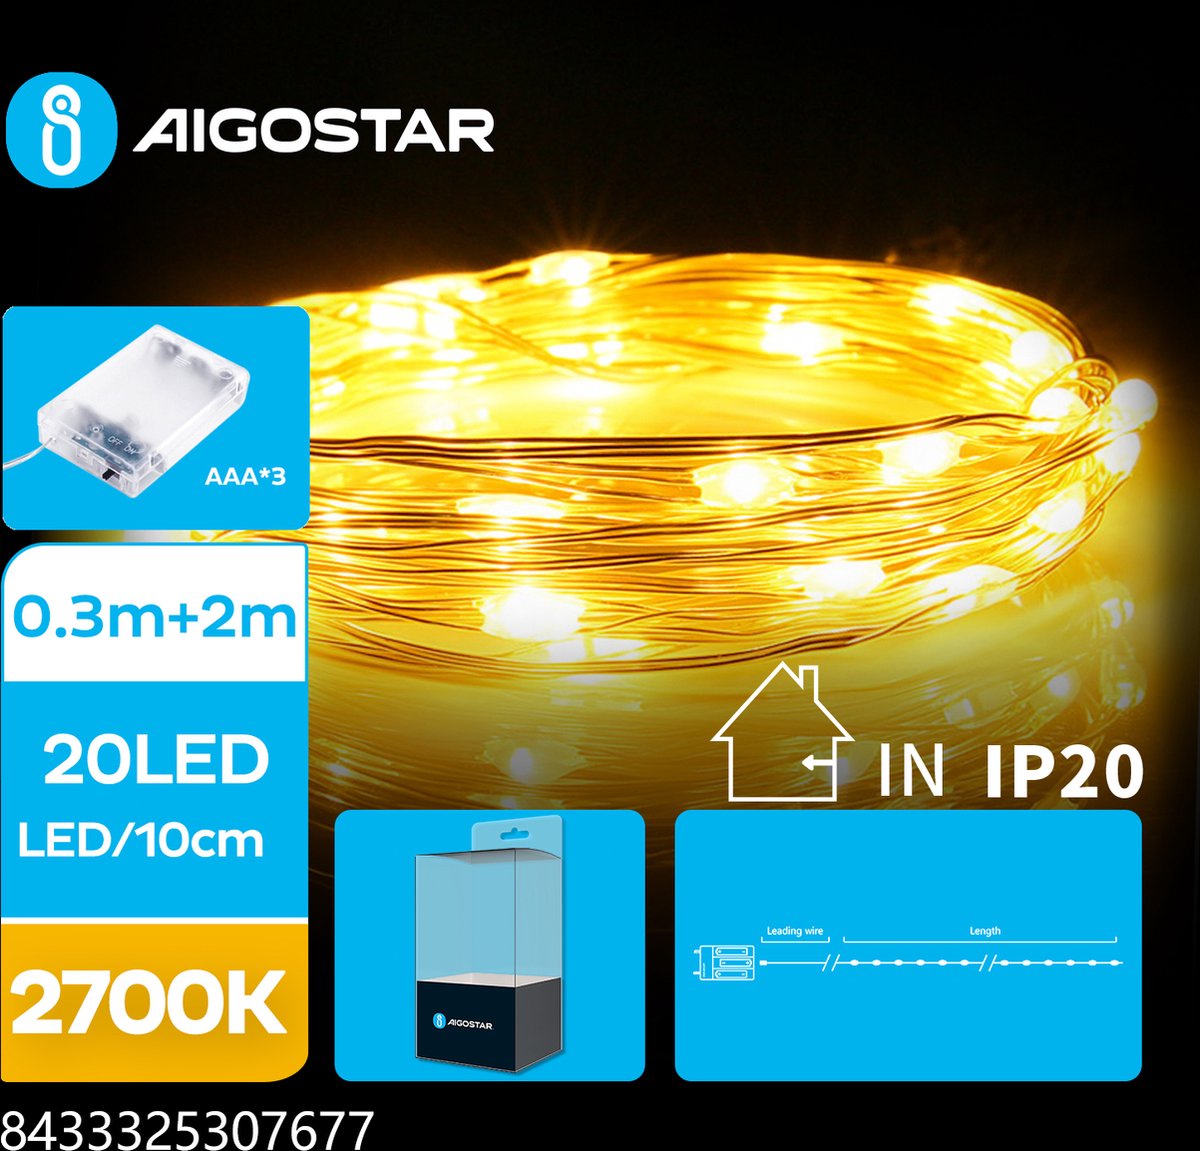 Aigostar - LED Kerstslinger - 20 LEDS - Koperdraad - 2700K - 2 meter - IP20 - 3x AAA batterij